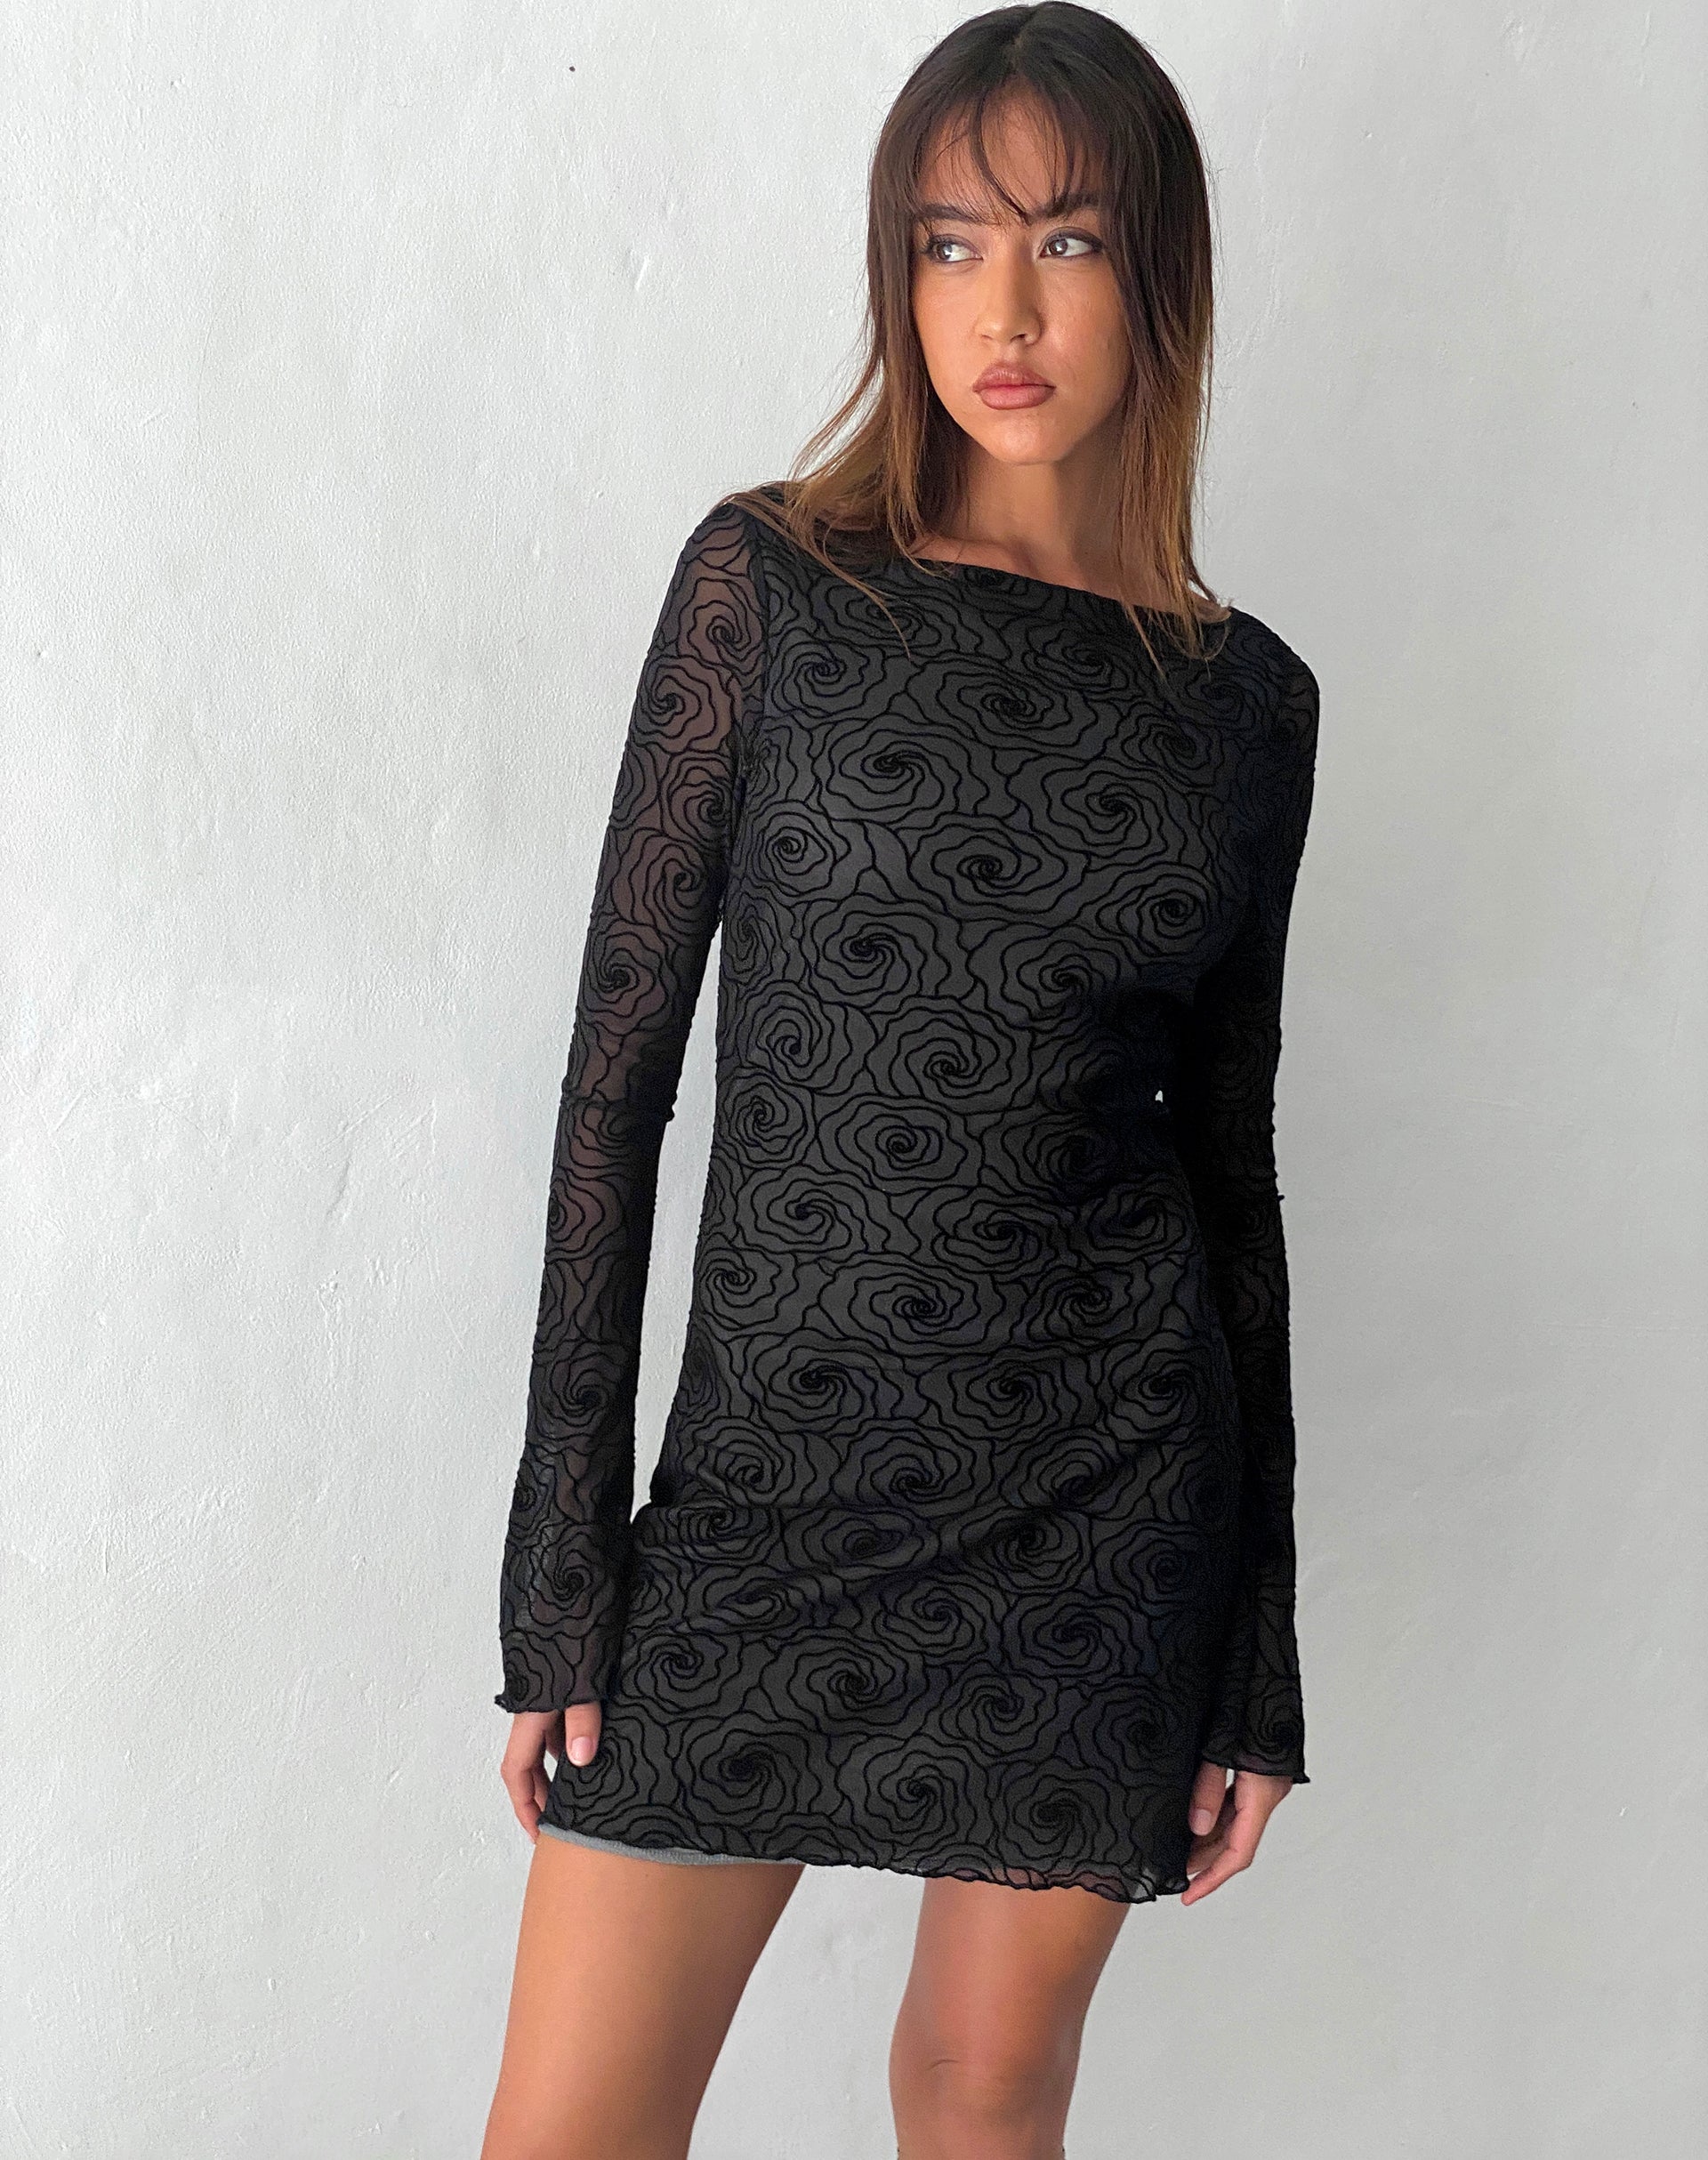 Black Mesh Dress by Louna for $35